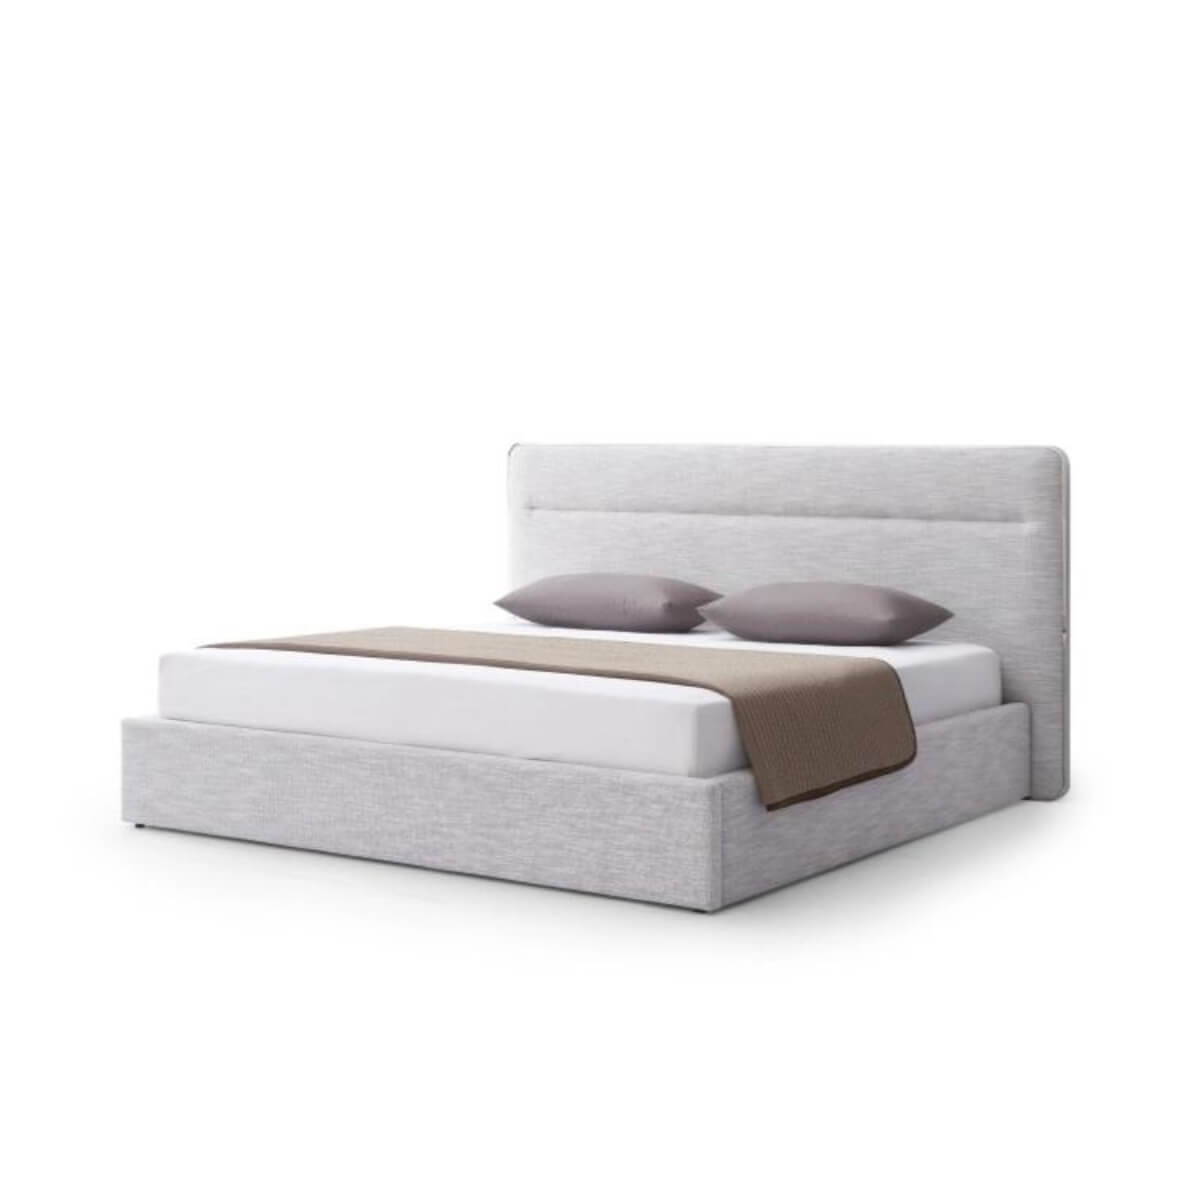 MidnightMuse Luxurious Cotton Linen Bed